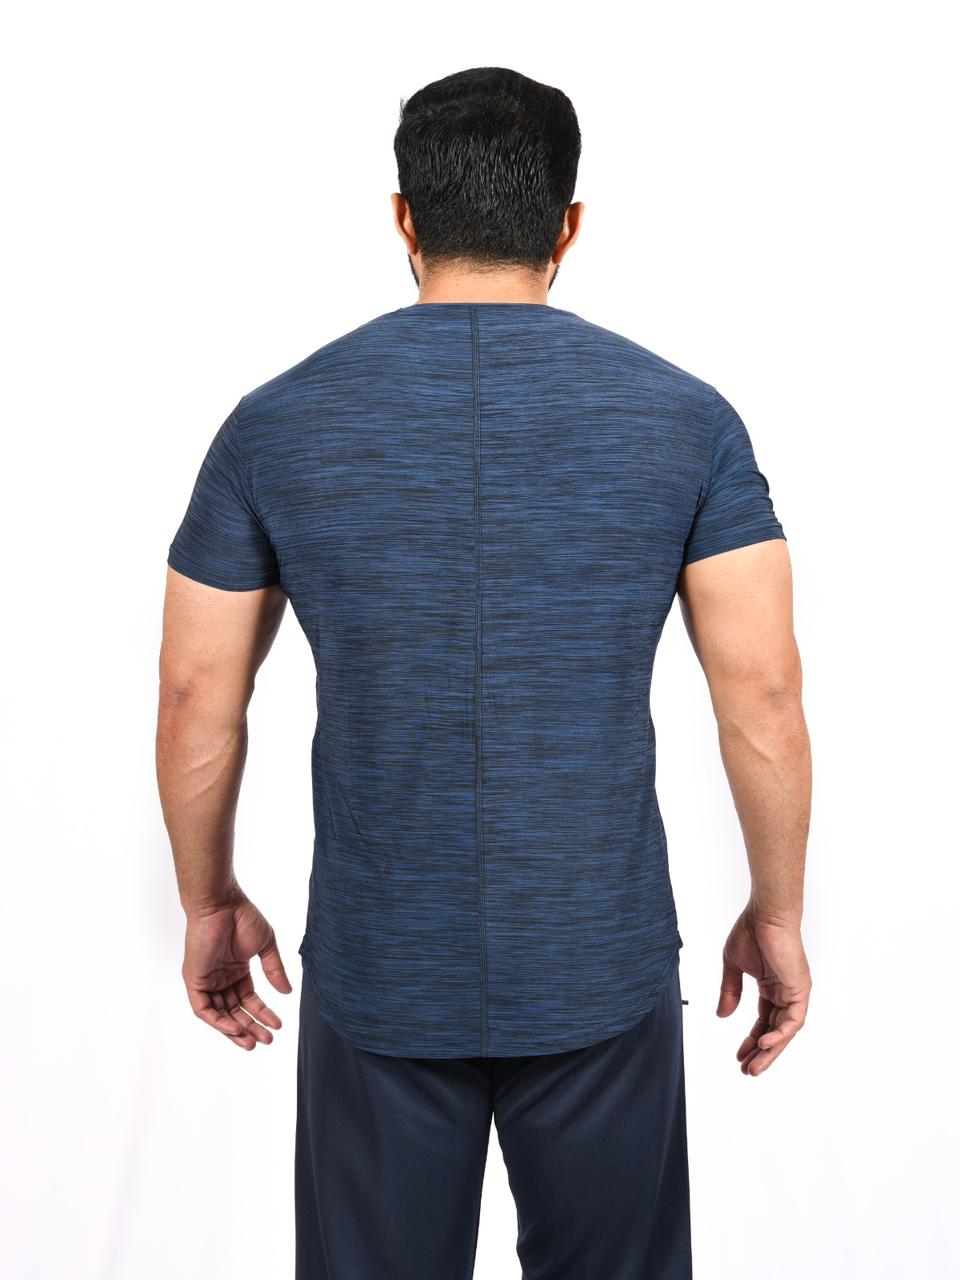 Ronex Lycra Super Stretch Melange T-Shirt